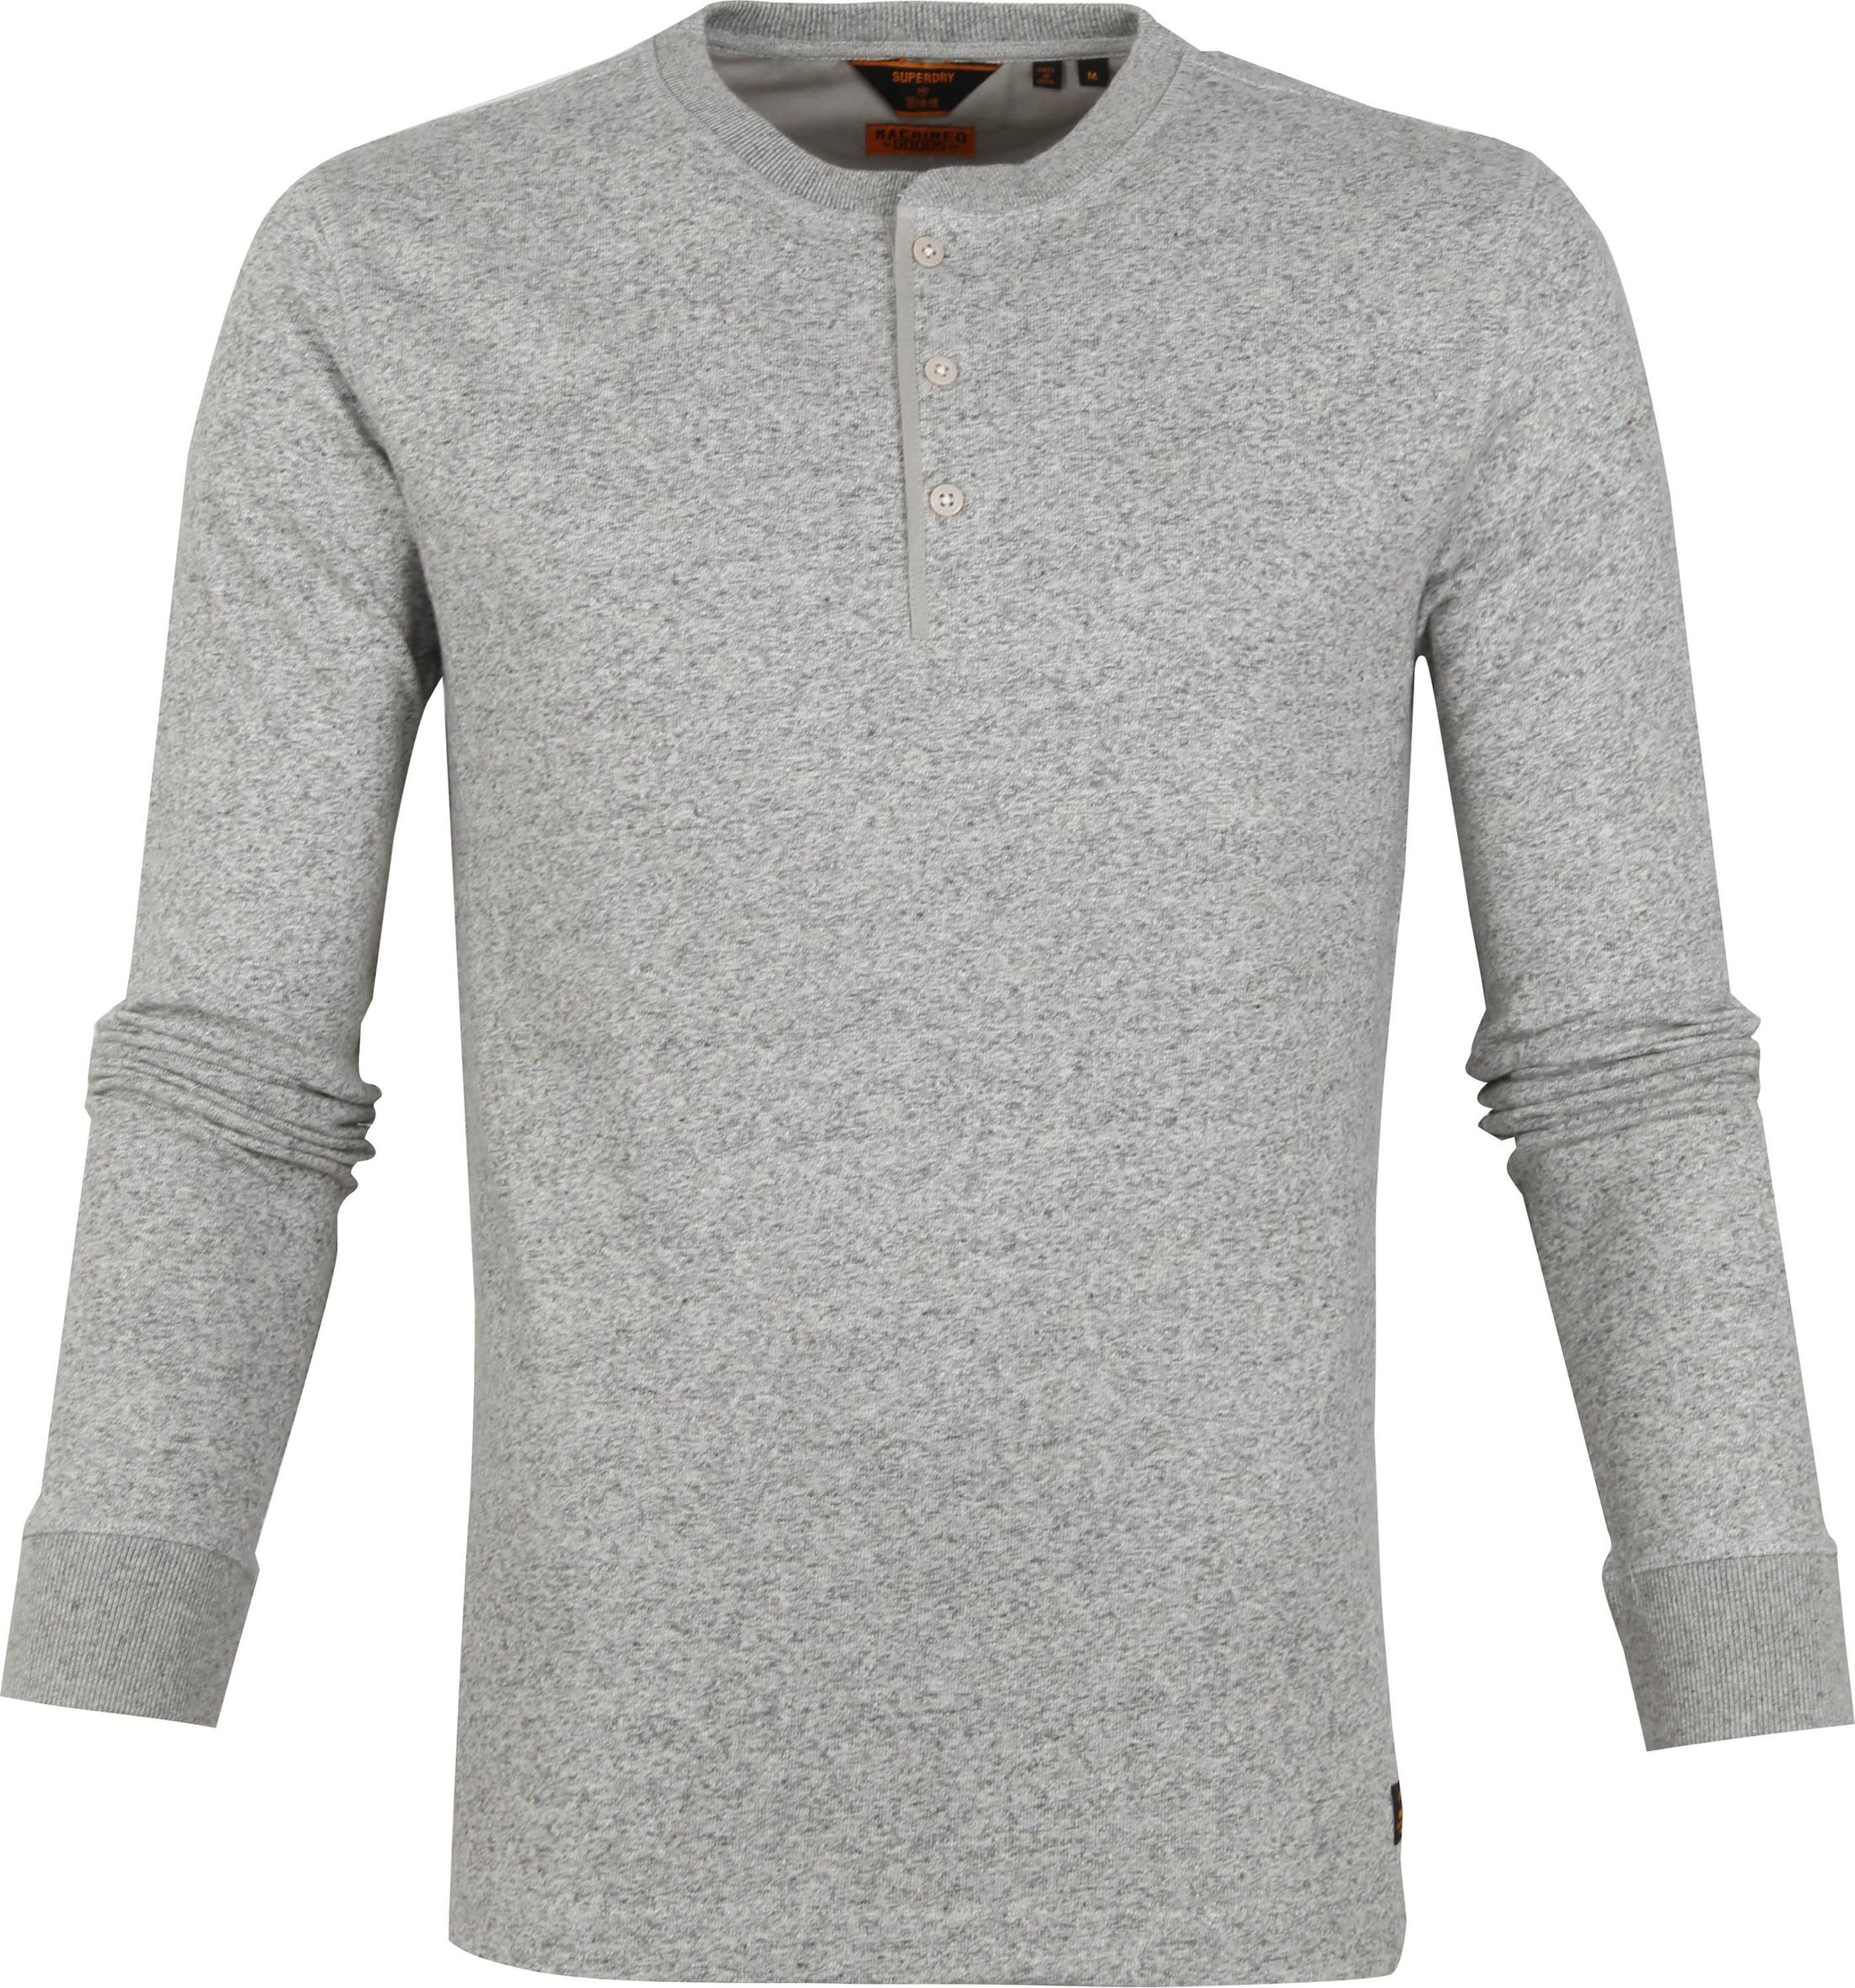 Superdry Longsleeve T-Shirt Grandad Top Grey size XXL